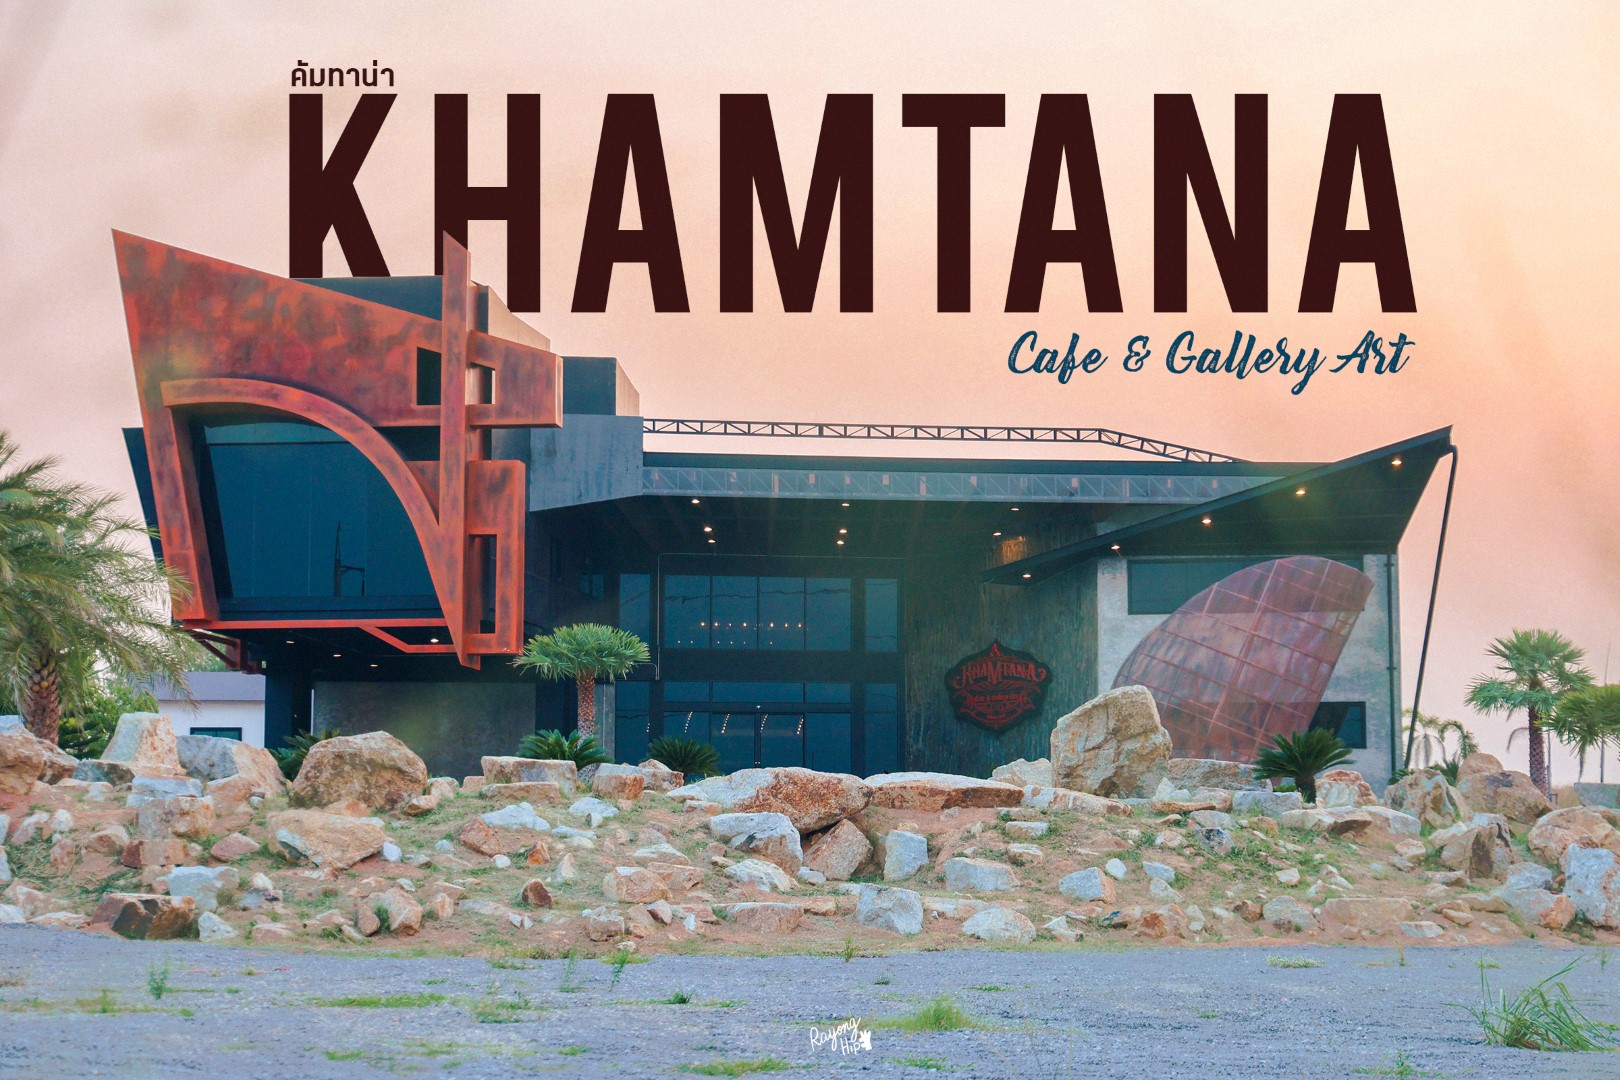 Khamtana Cafe & Gallery Art คัมทาน่า คาเฟ่ใหญ่อลัง ดาร์คเท่แต่ซ่อนความอบอุ่นไว้ด้านใน